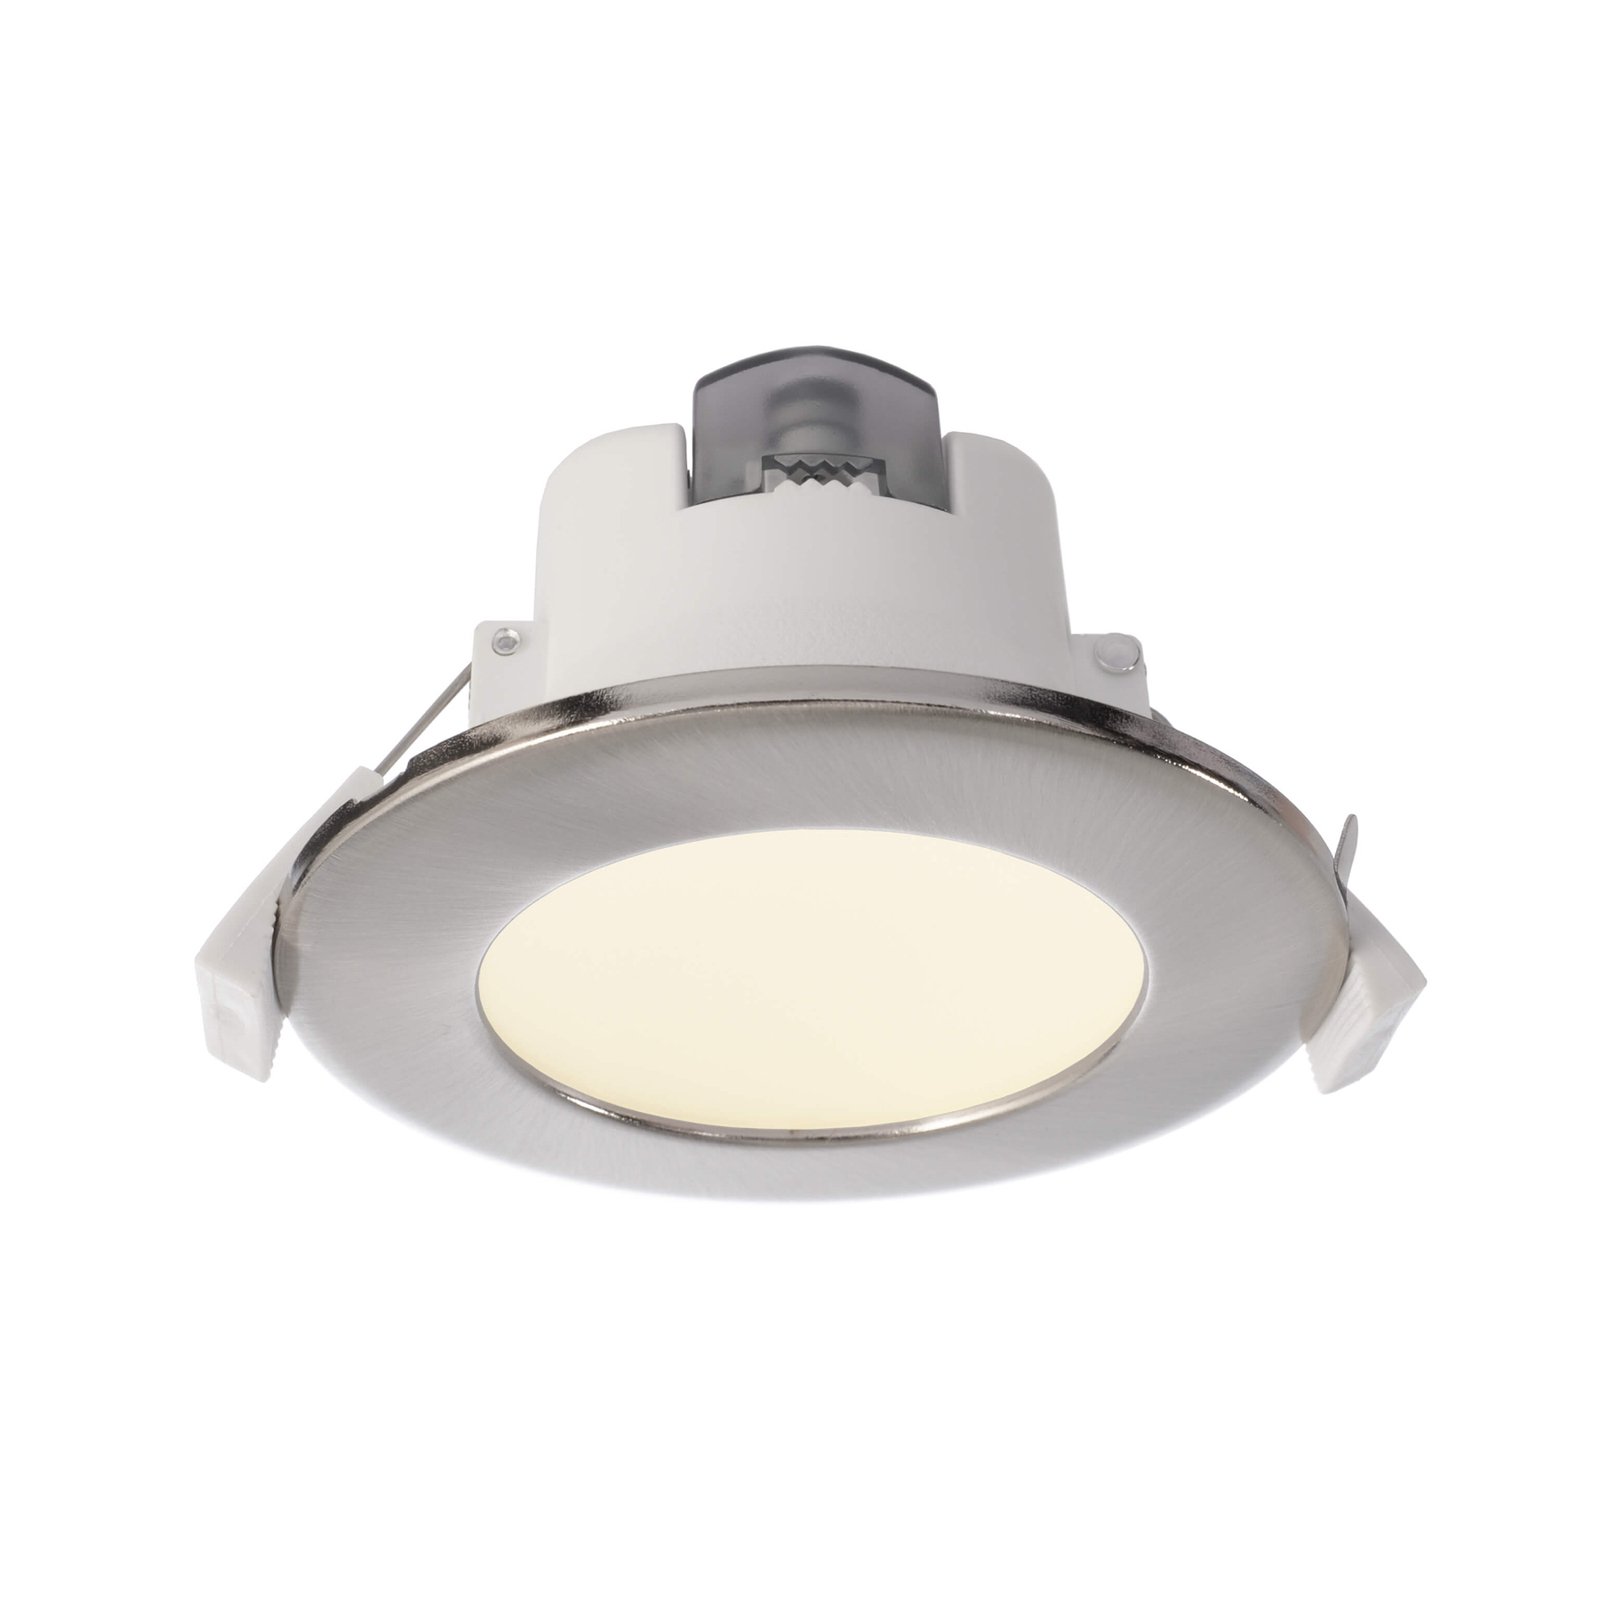 Acrux 68 LED recessed light, white, Ø 9.5 cm